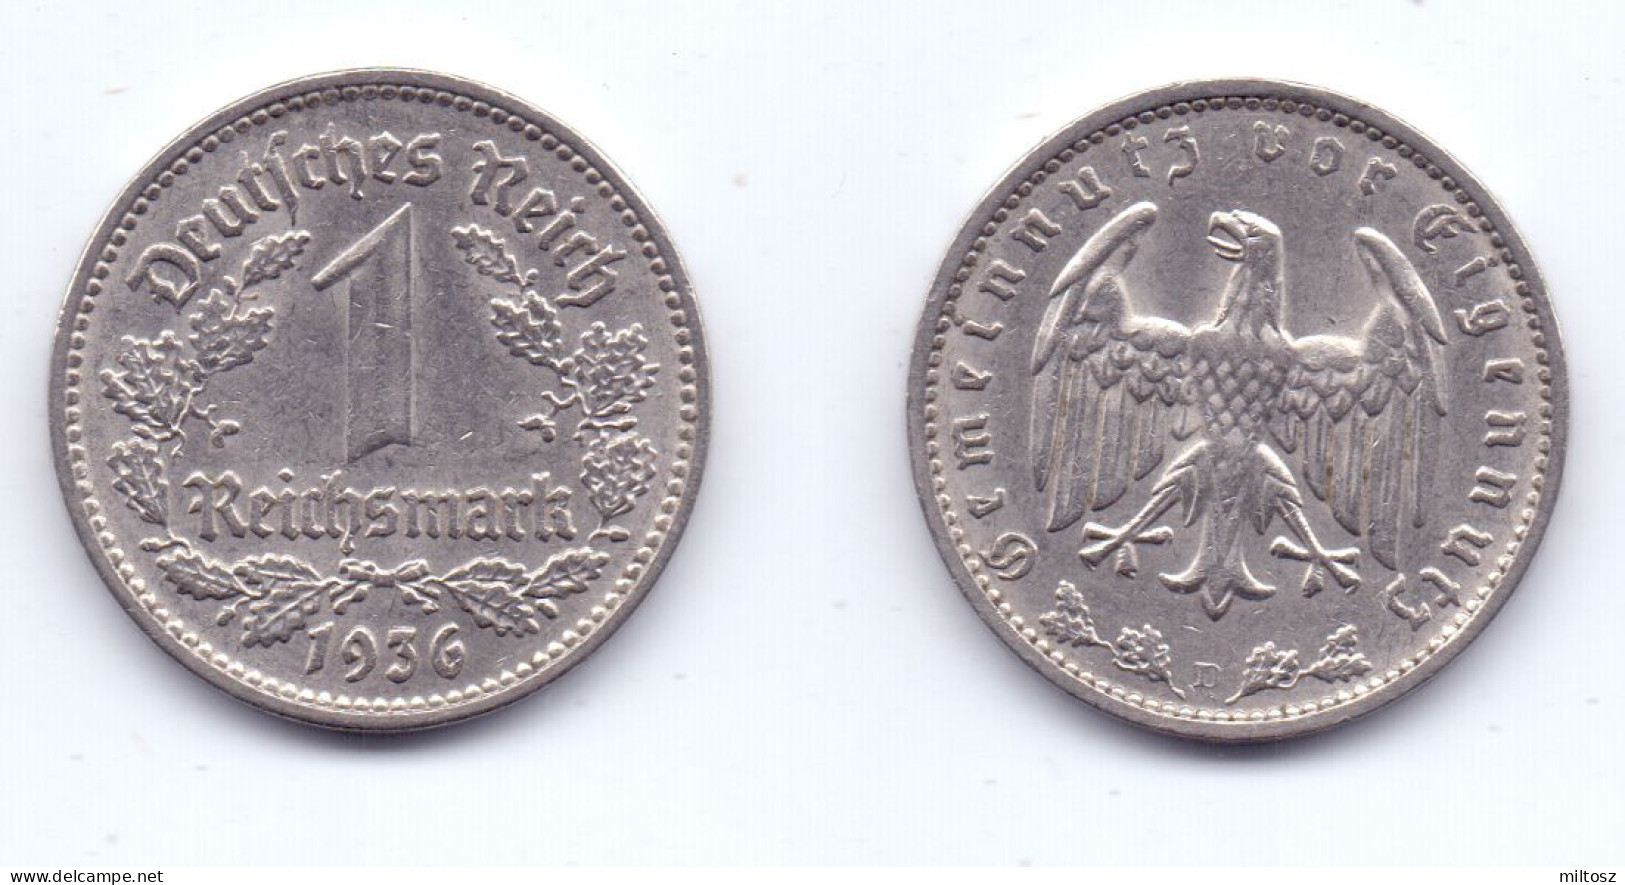 Germany 1 Reichsmark 1936 E - 1 Reichsmark